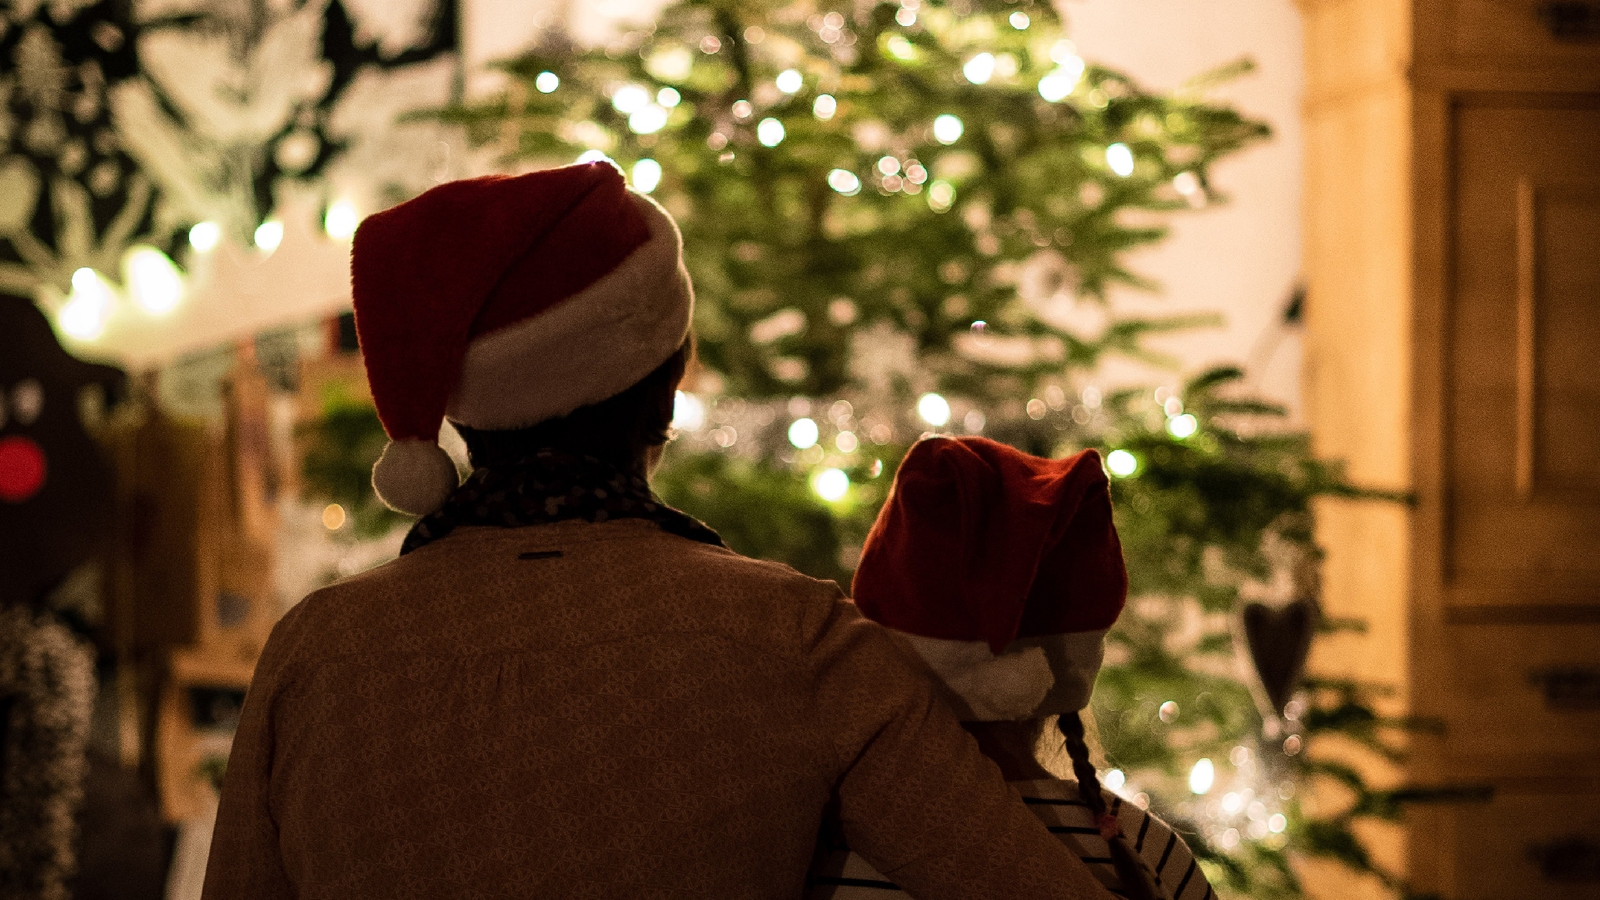 Wish Your Close Ones a Happy Holiday Season via UNITED24